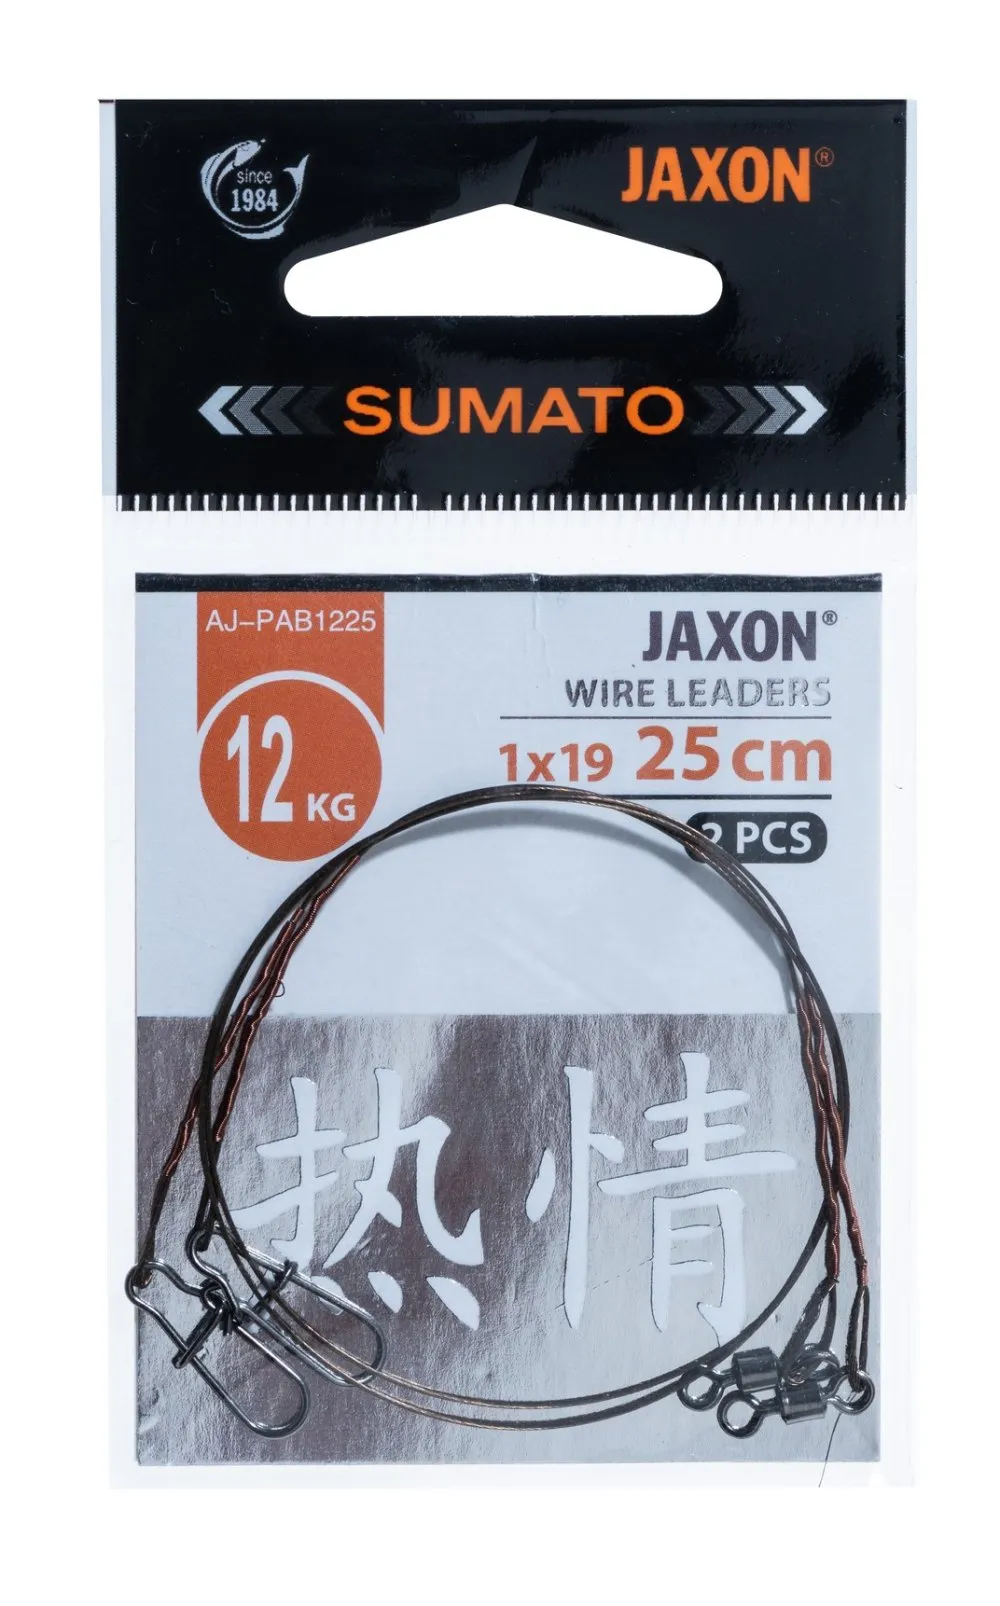 SNECI - Horgász webshop és horgászbolt - JAXON SUMATO WIRE LEADERS 12kg 30cm